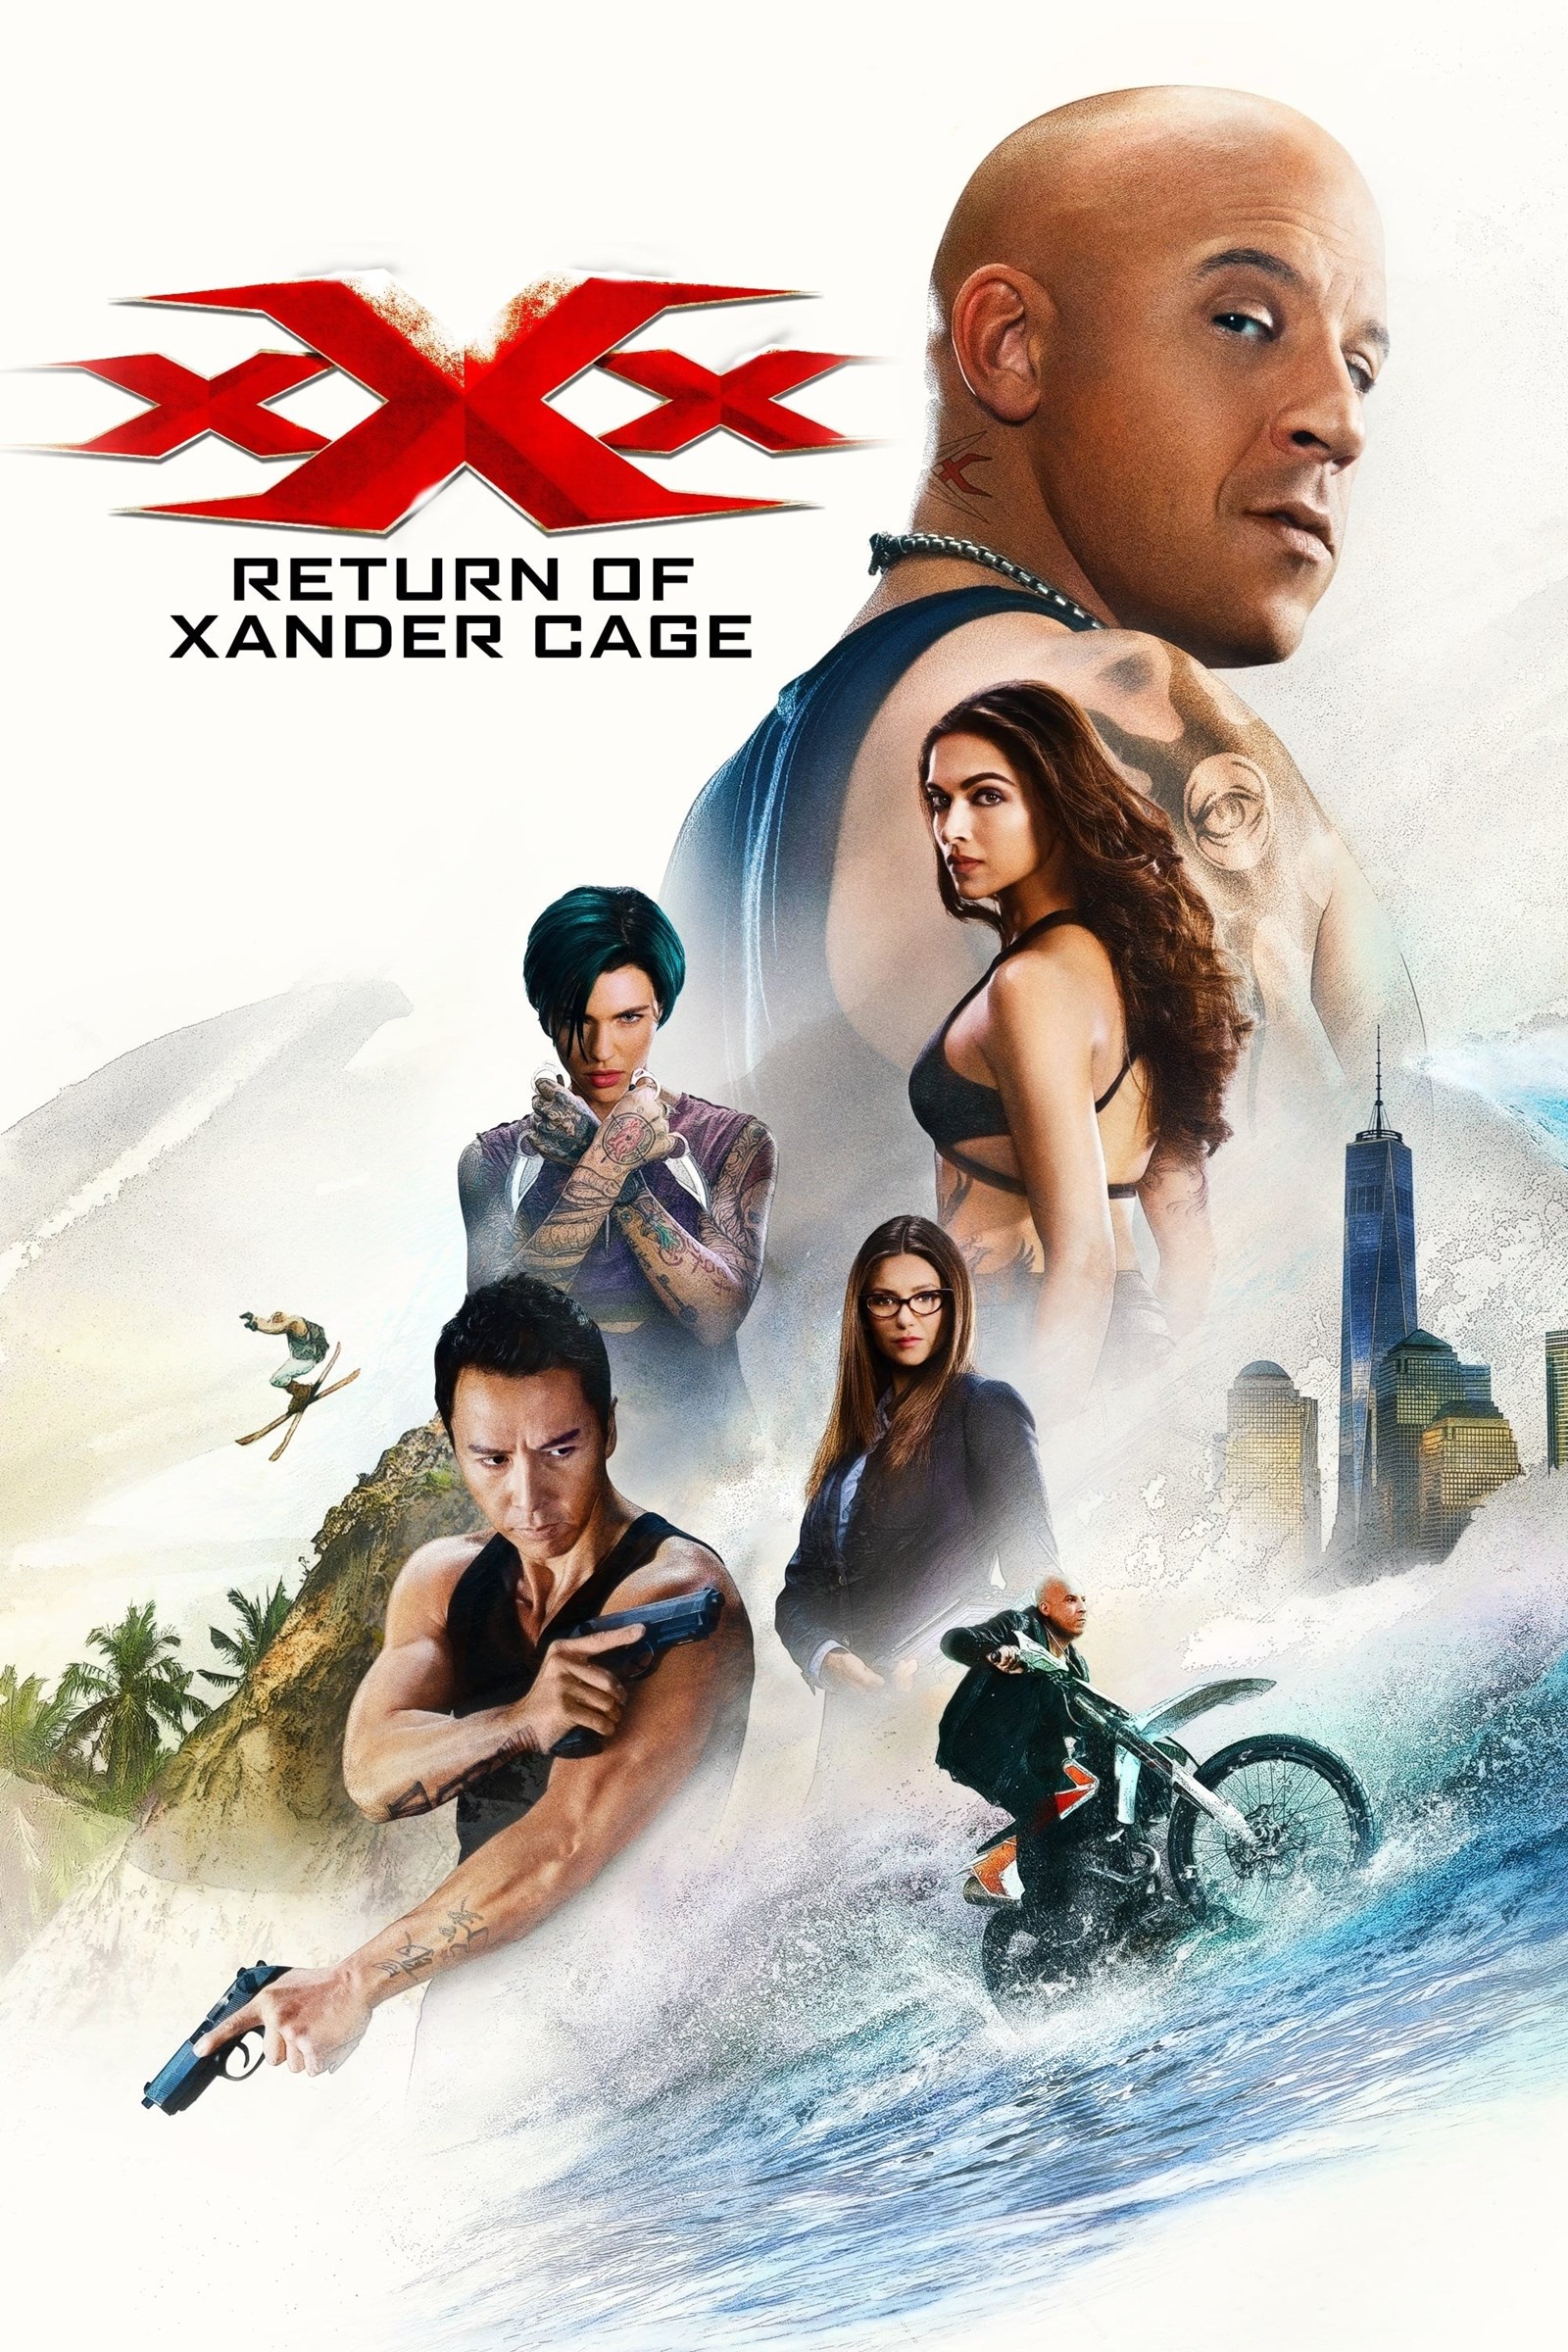 سابسین فارسی - Subscene - xXx: Return of Xander Cage Arabic subtitle